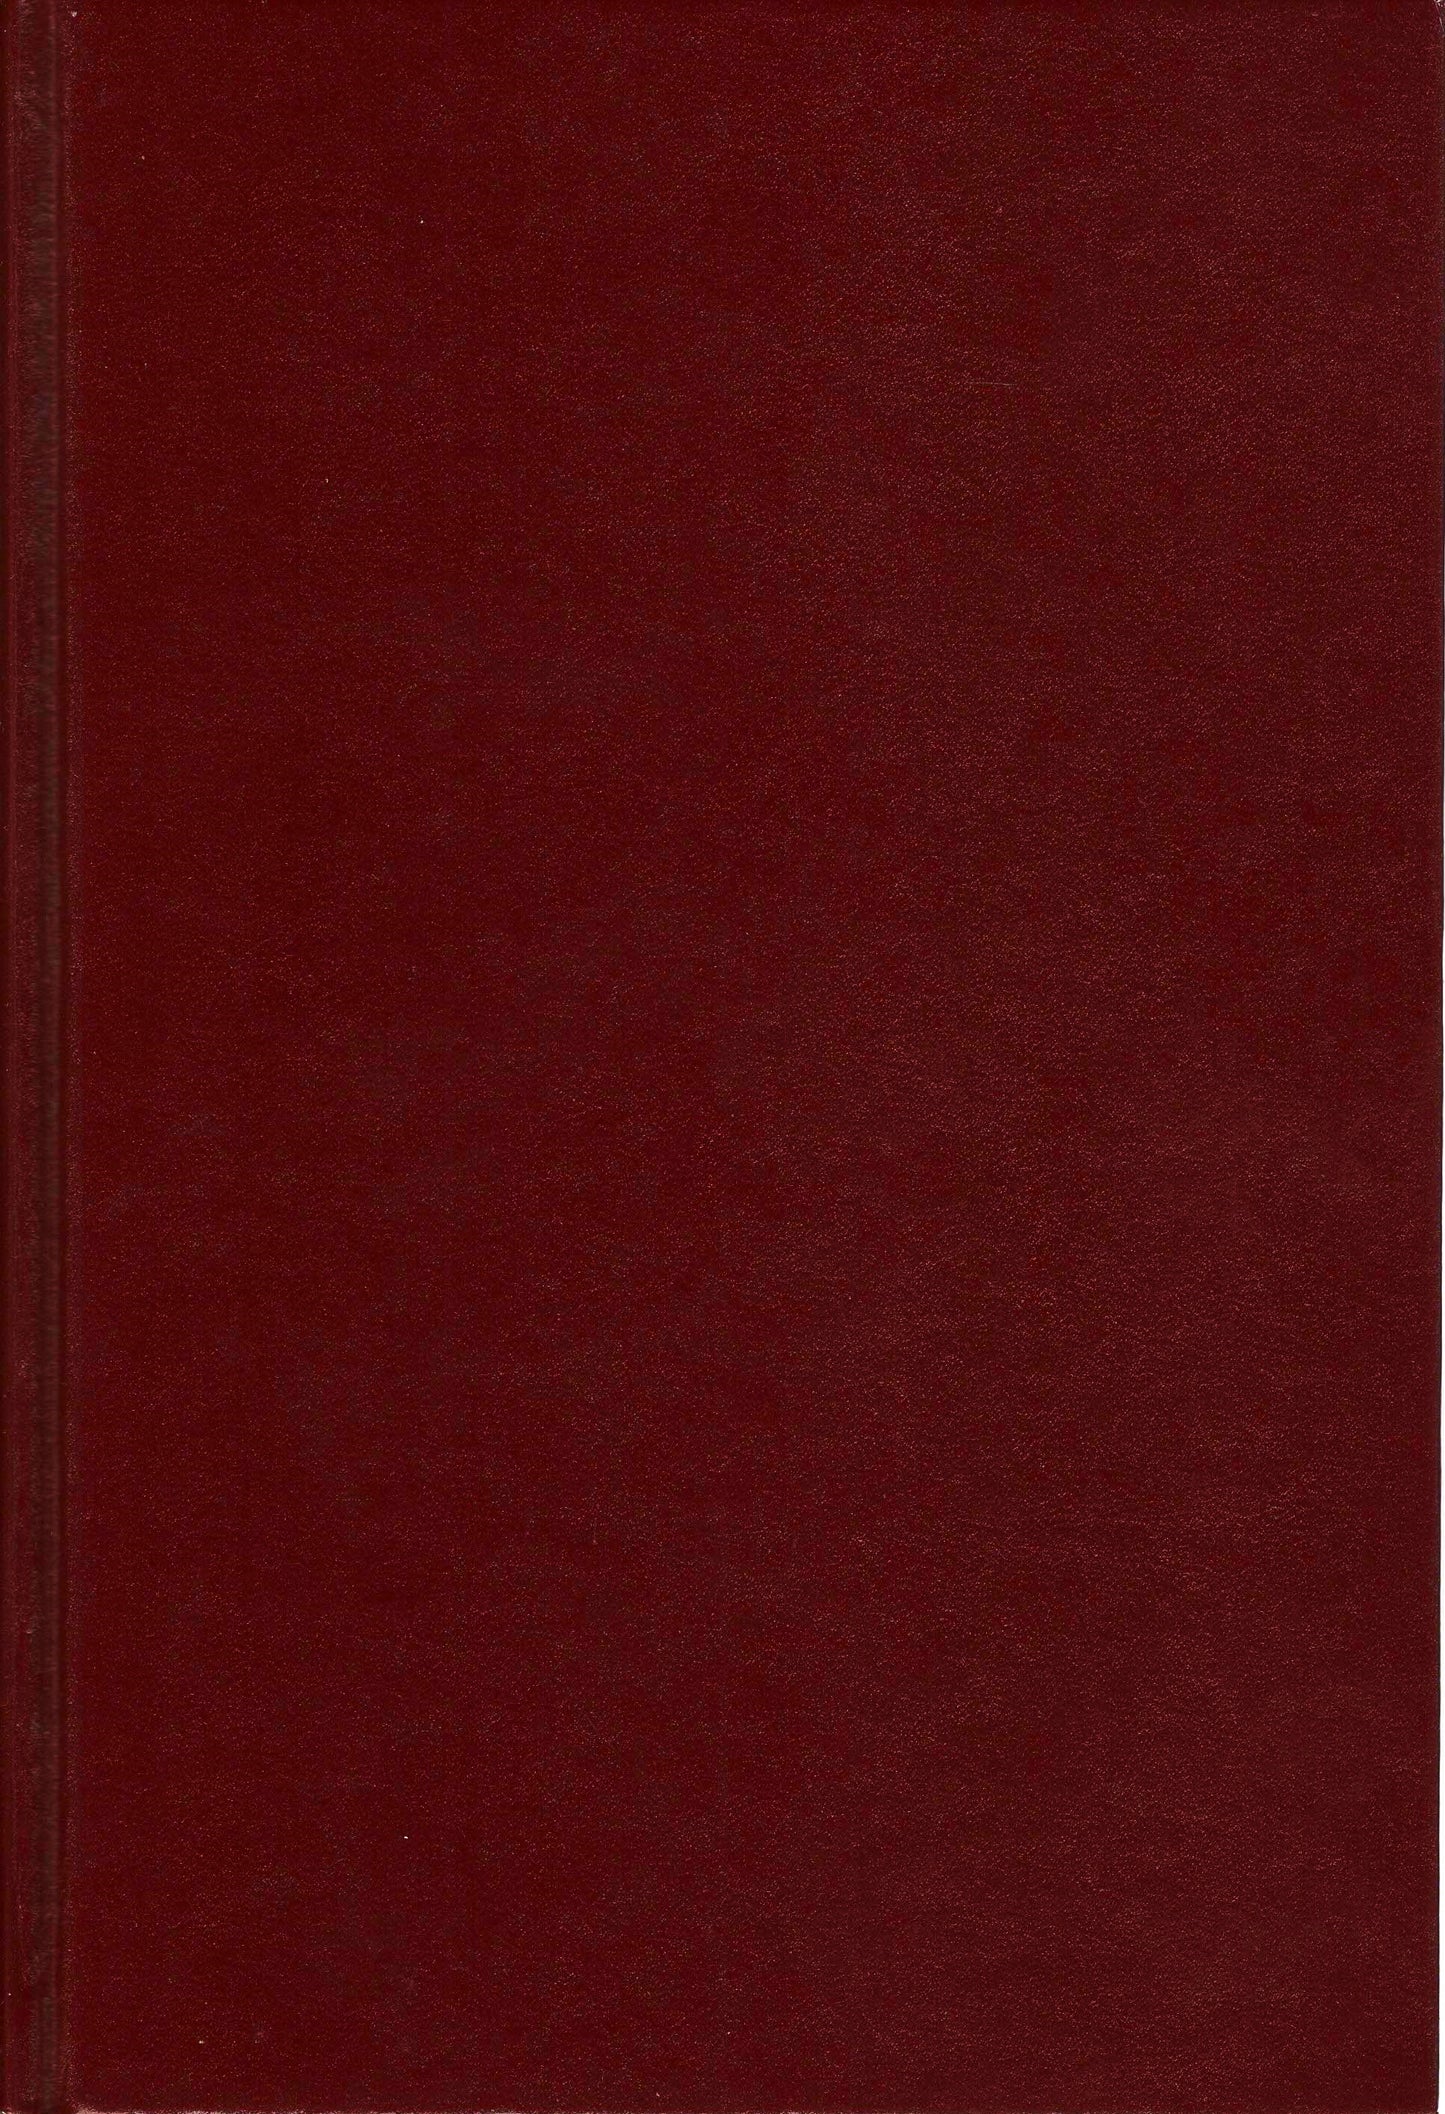 Kregel Publications KJV The Companion Bible: The Authorized Version of 1611 - Hardcover (Burgundy)